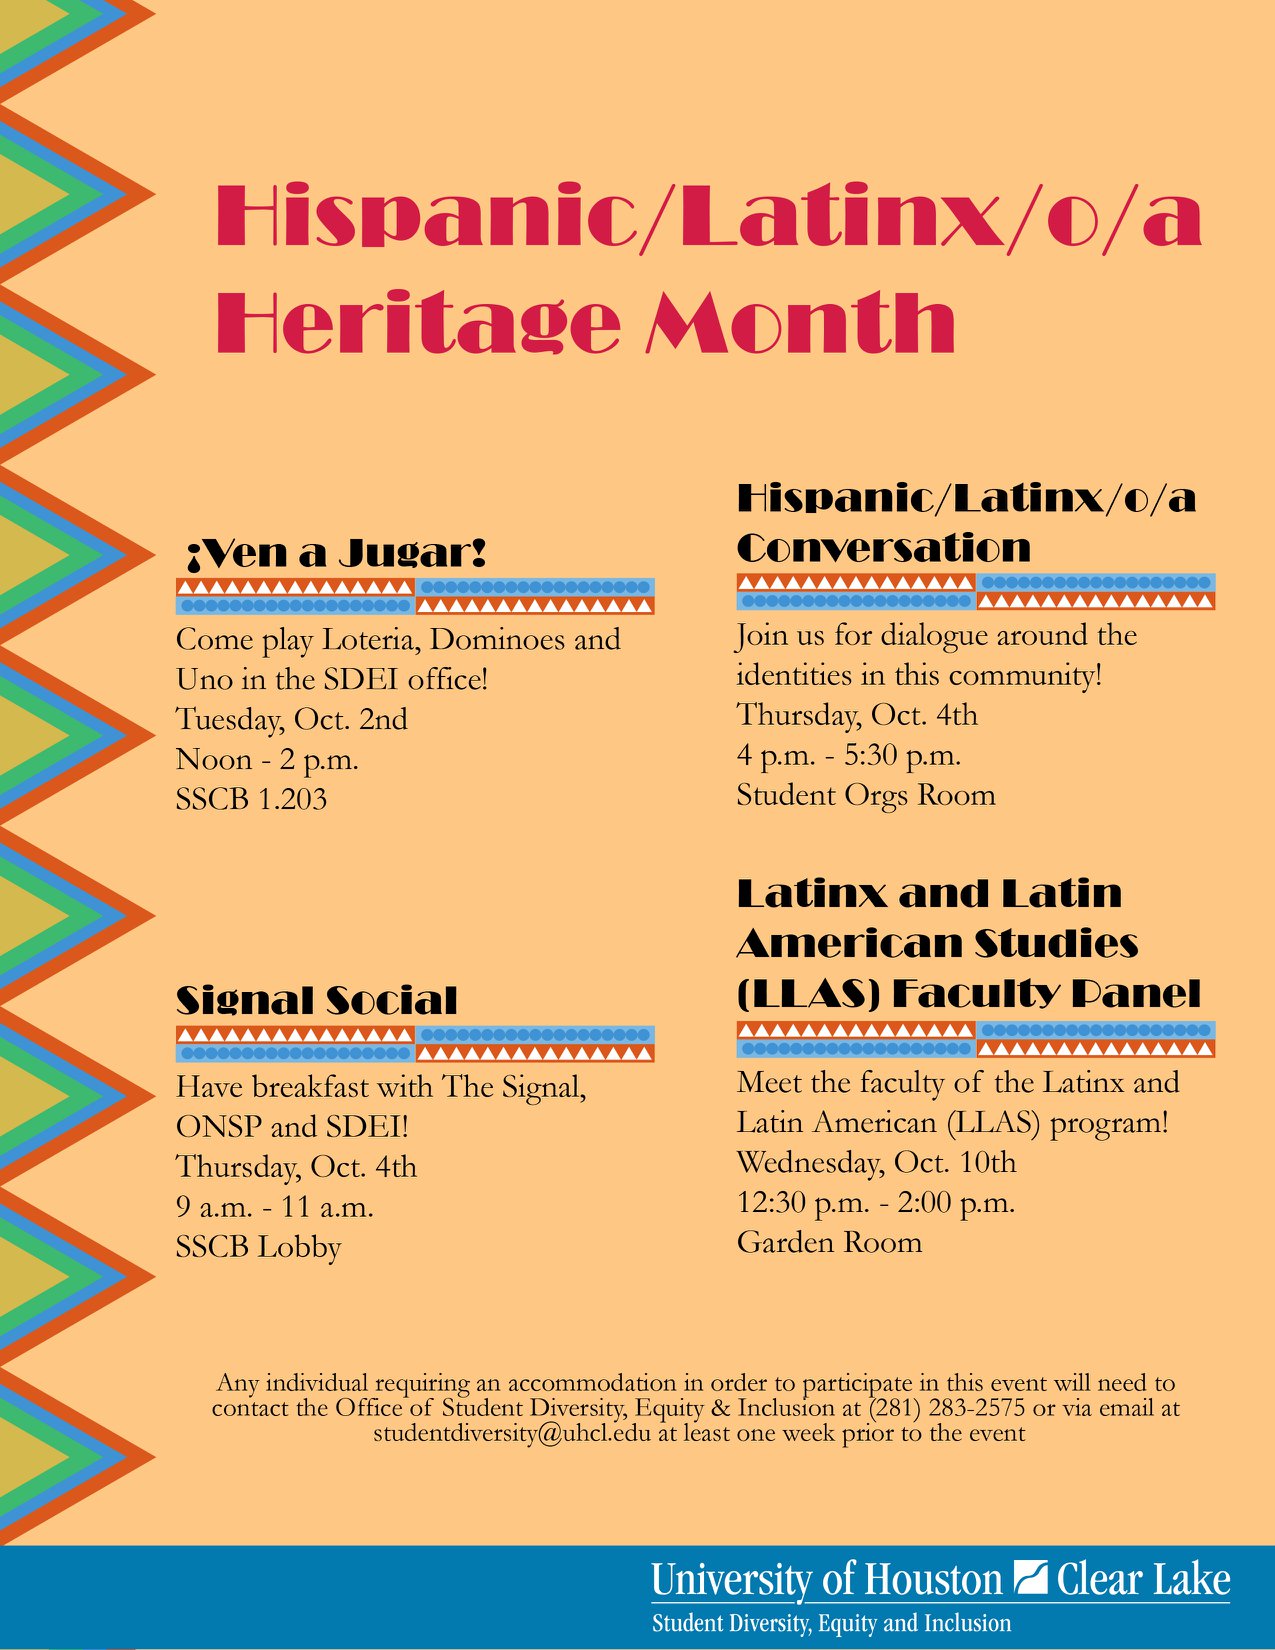 PHOTO: Hispanic Heritage Month flyer. Courtesy of Office of Student Diversity